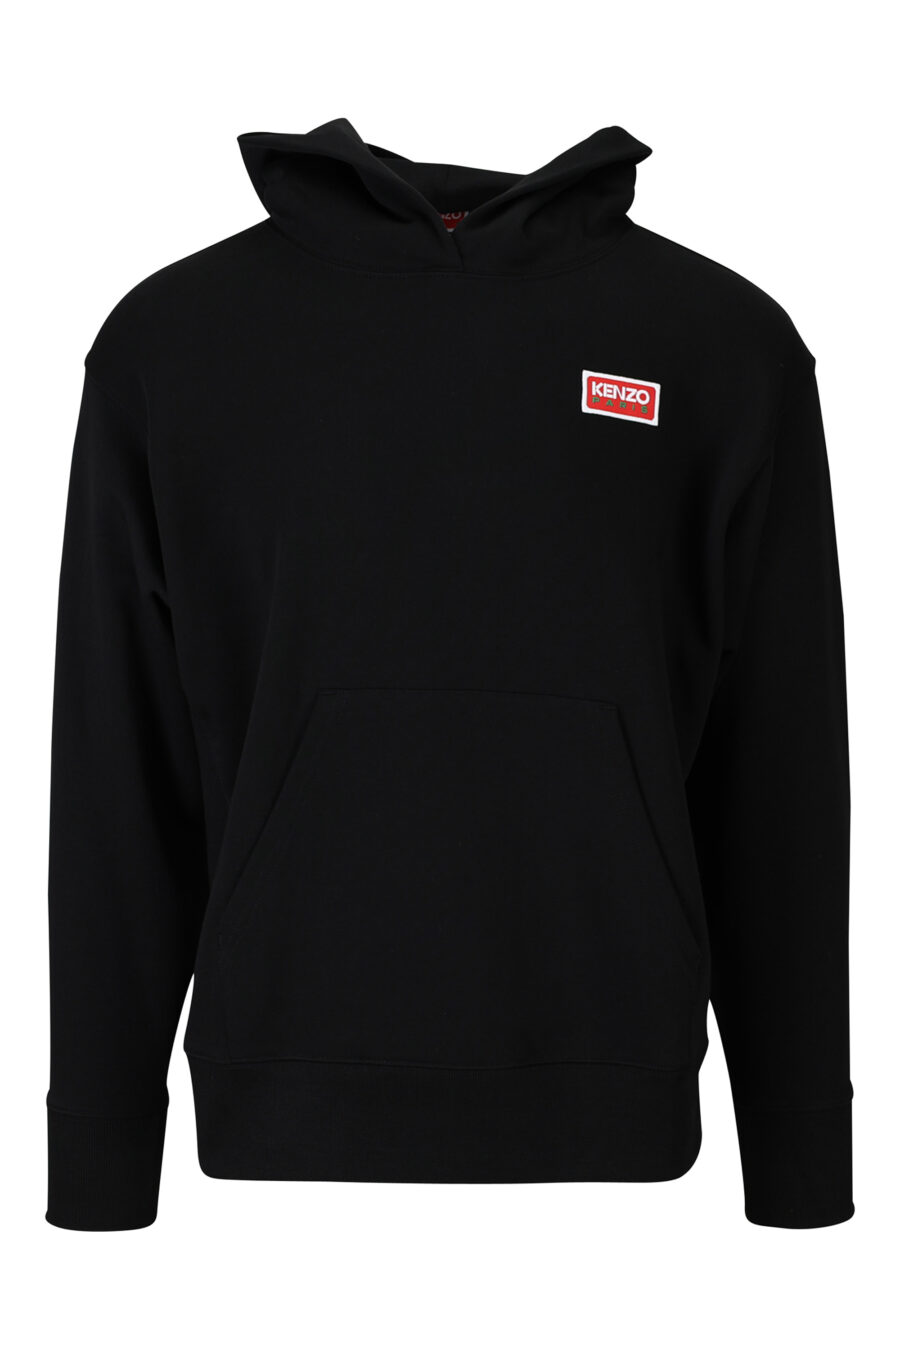 Oversize black hooded sweatshirt with "kenzo paris" logo - 3612230515673